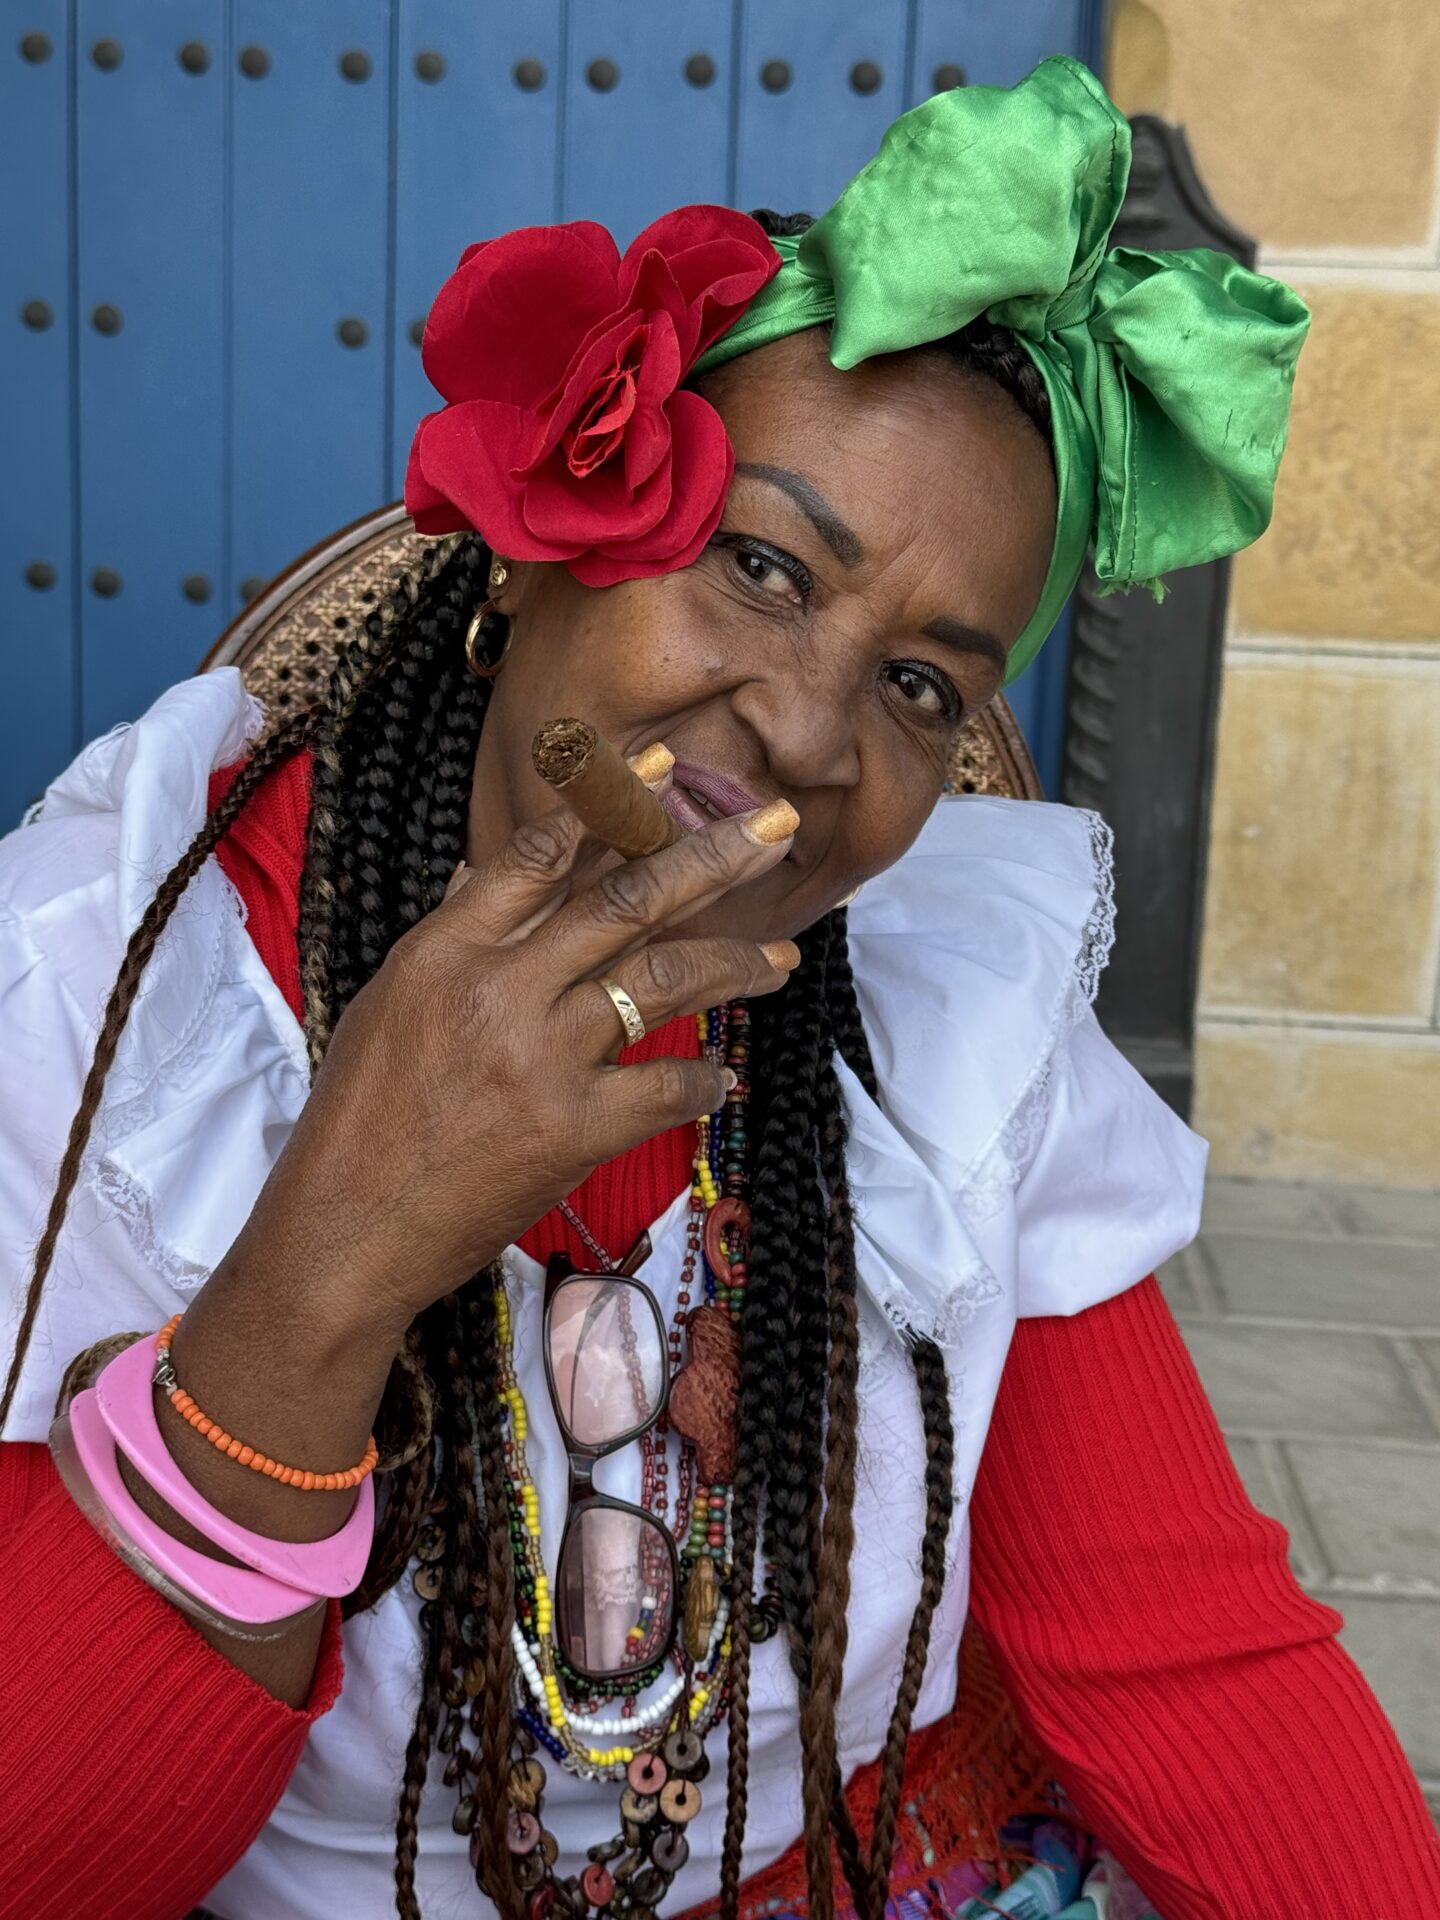 Street style portrait of a woman in traditional dress from Havana, Cuba, holding a cigar, as taken by Carol Schiraldi of Carol's Little World 